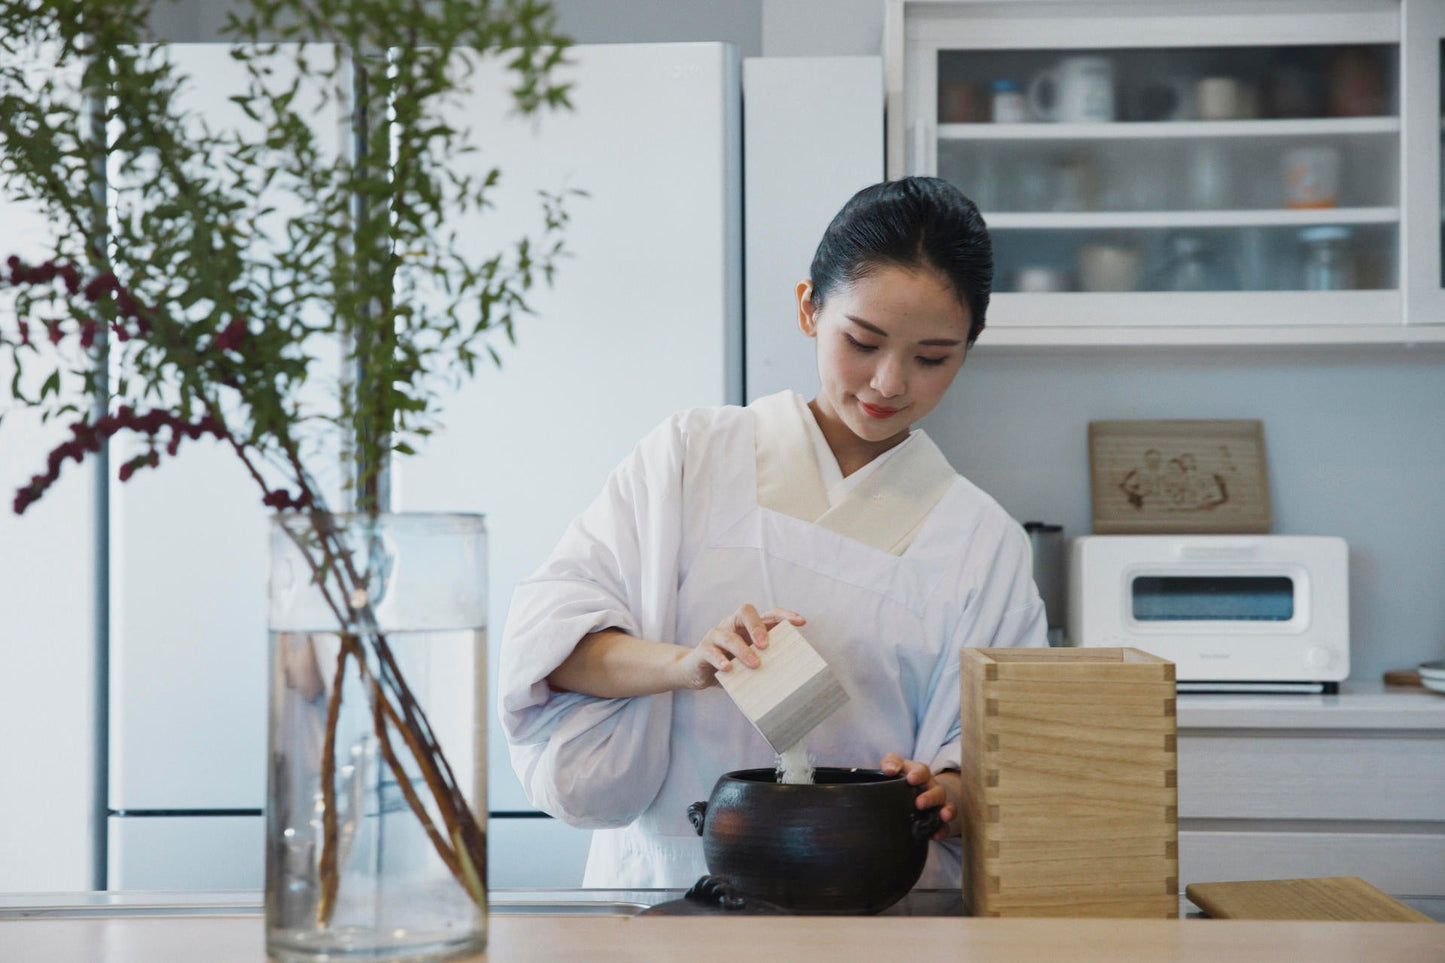 Kimonoko Cooking #2: “Learn to make Japanese Curry Rice yourself!”